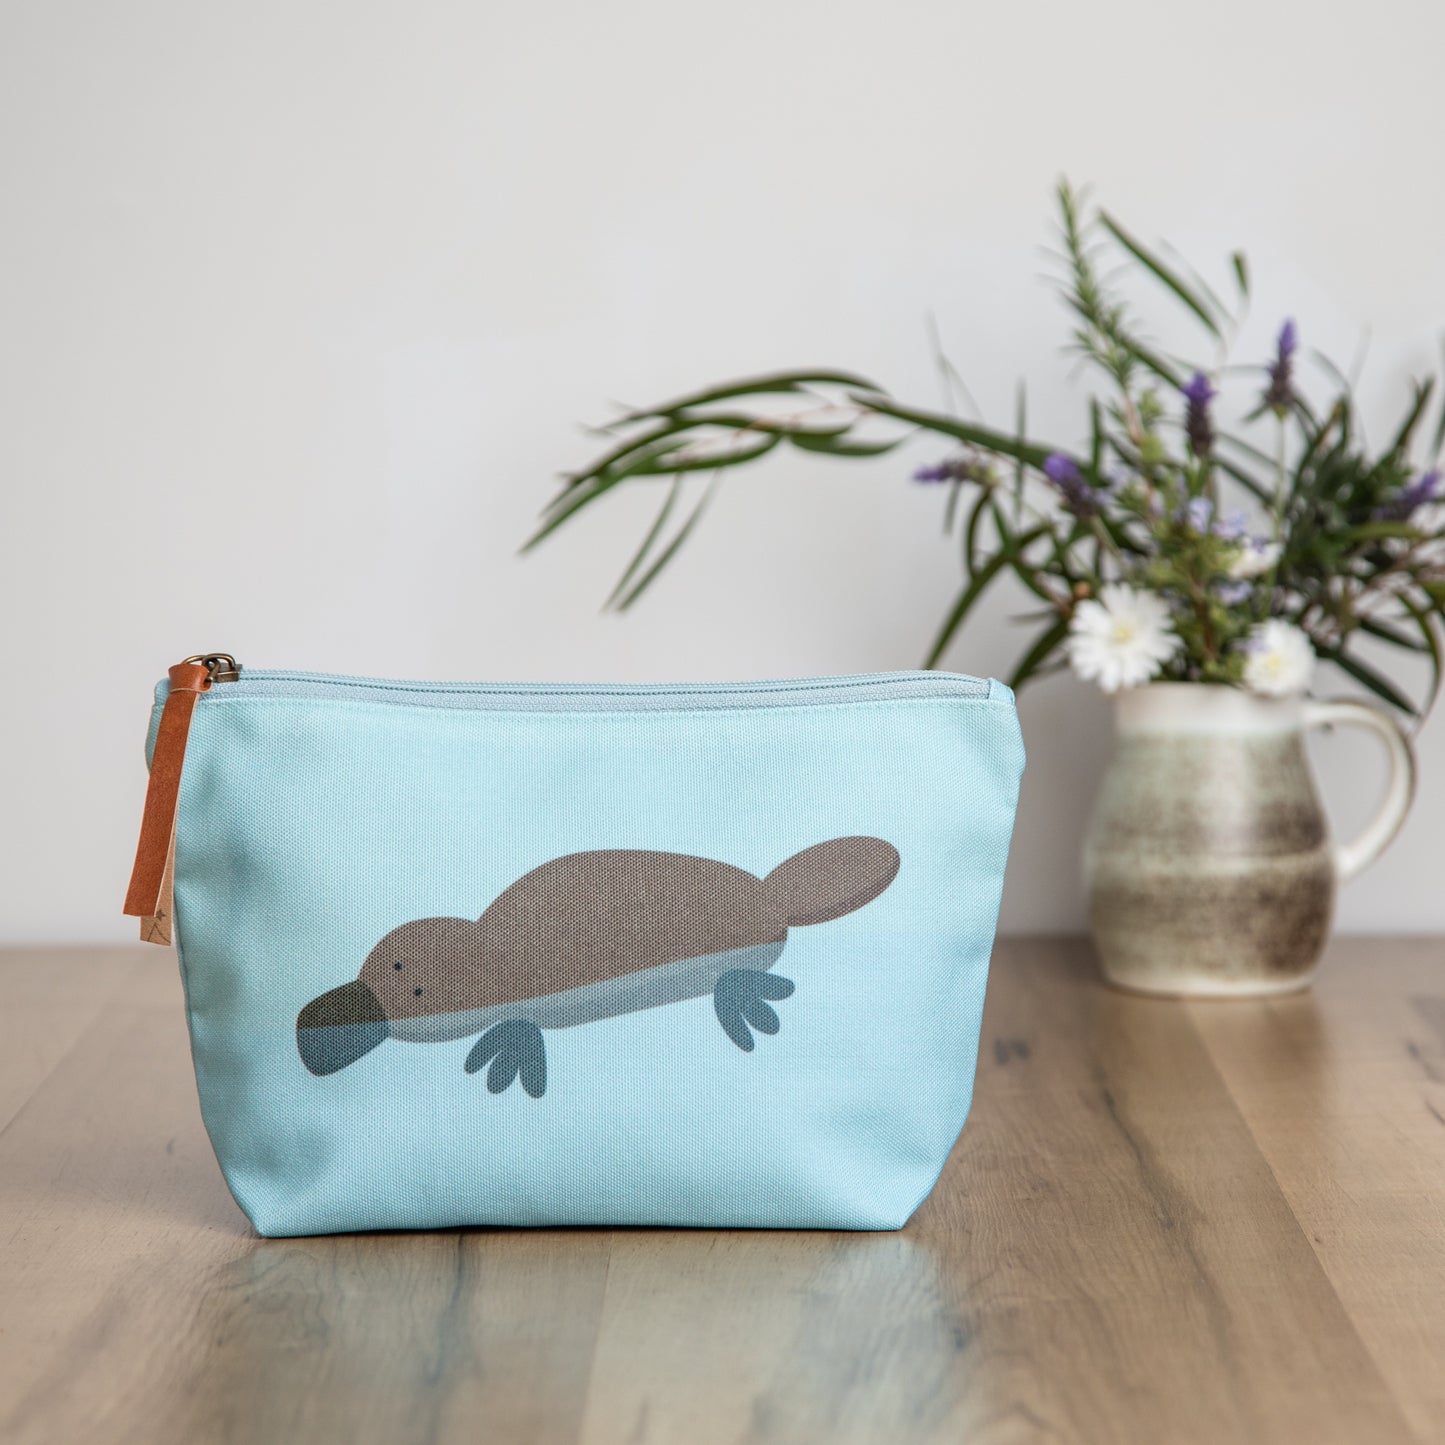 Platypus Make Up Bag